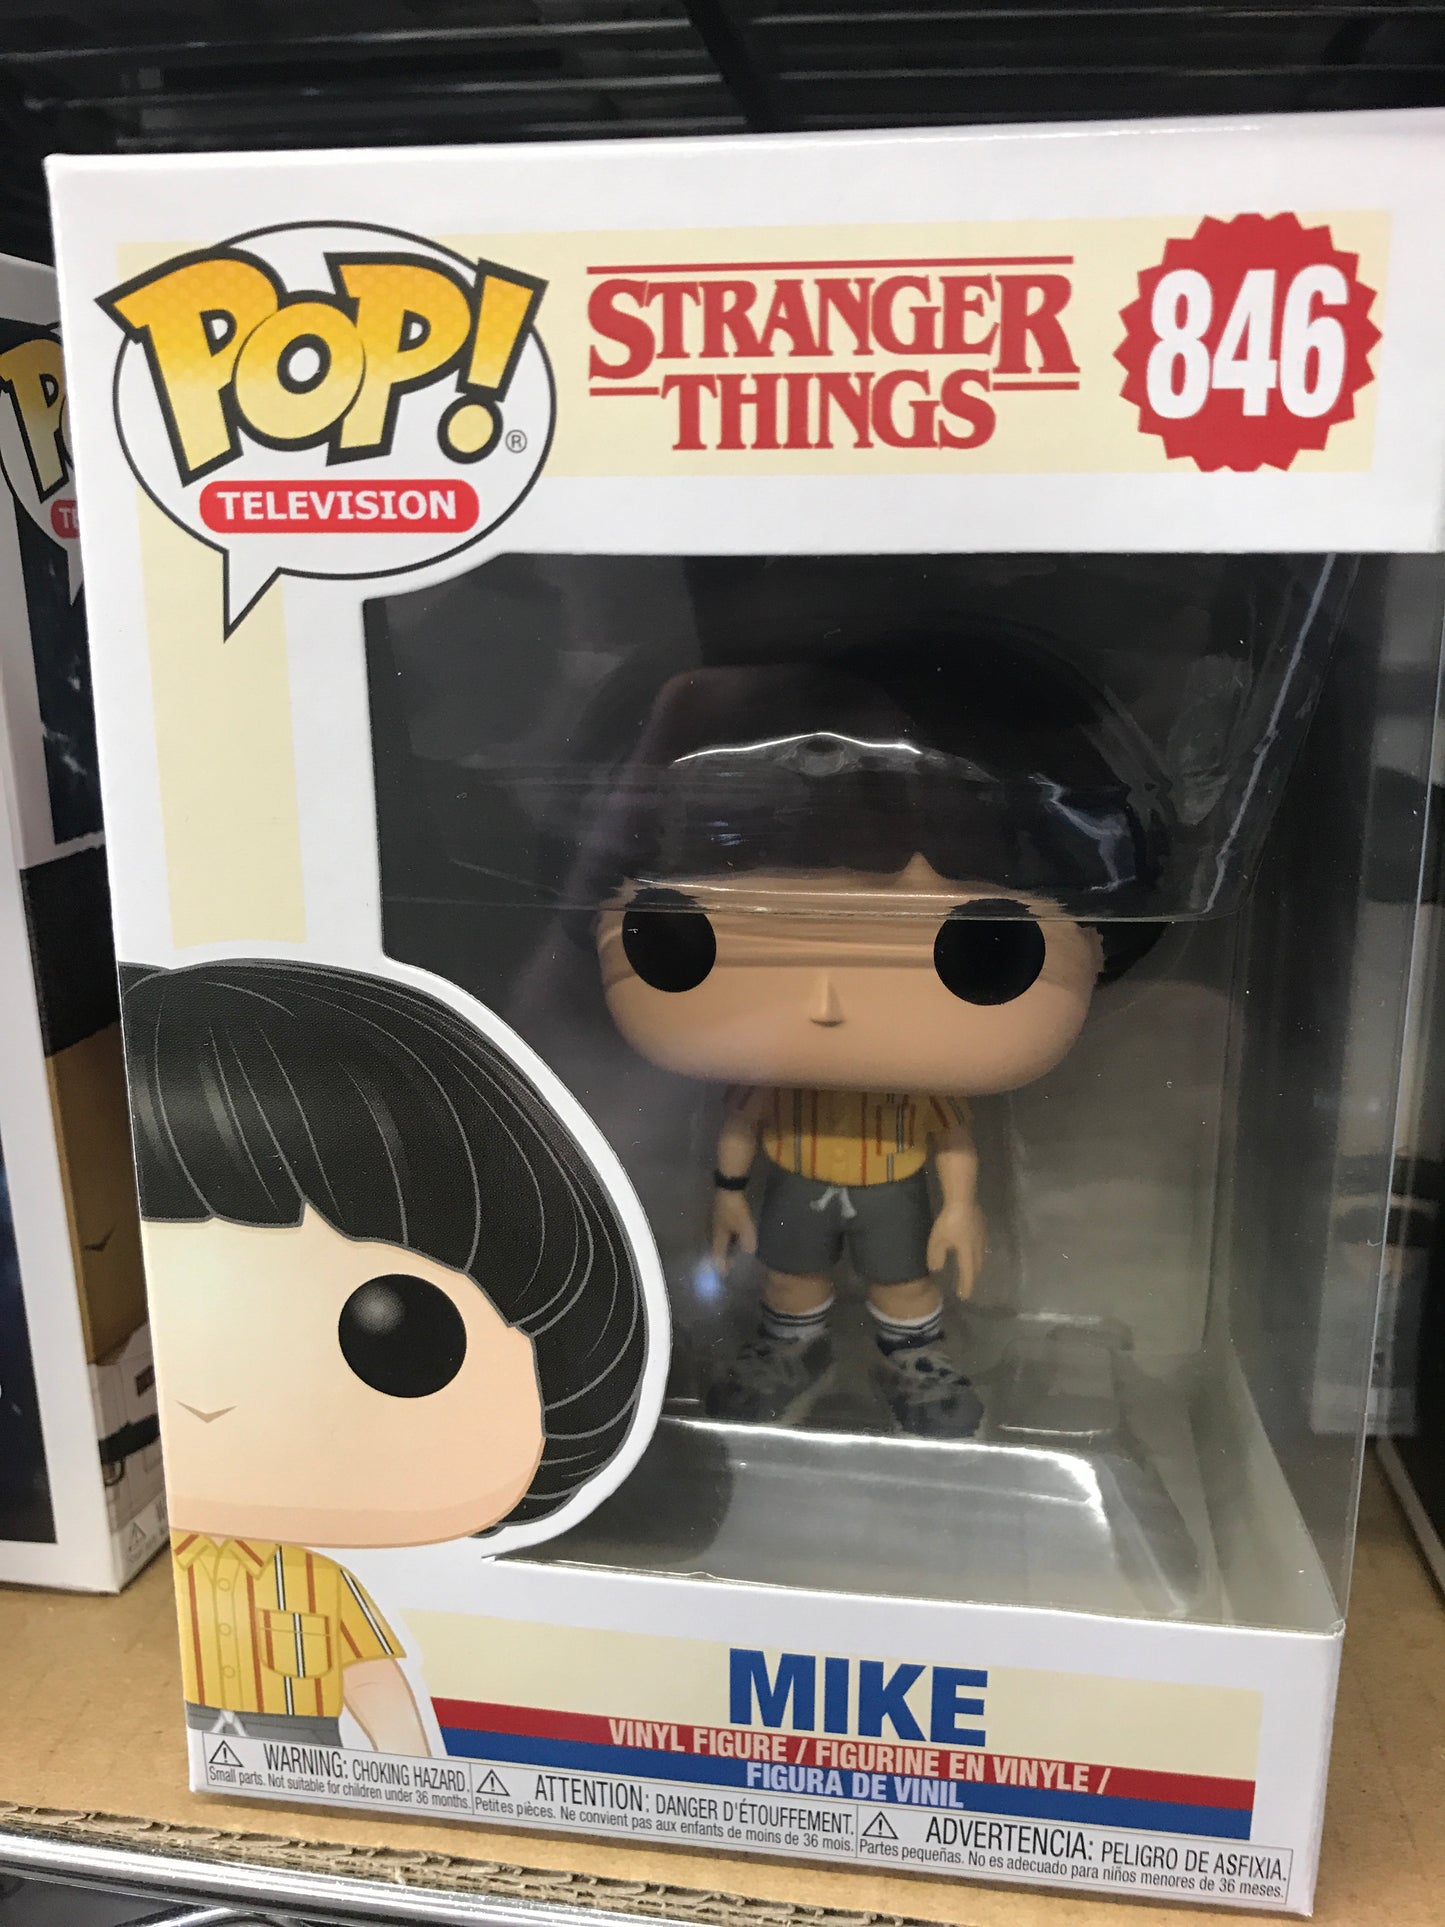 Stranger Things Season 3 Mike 846 Funko Pop! Vinyl Figure television